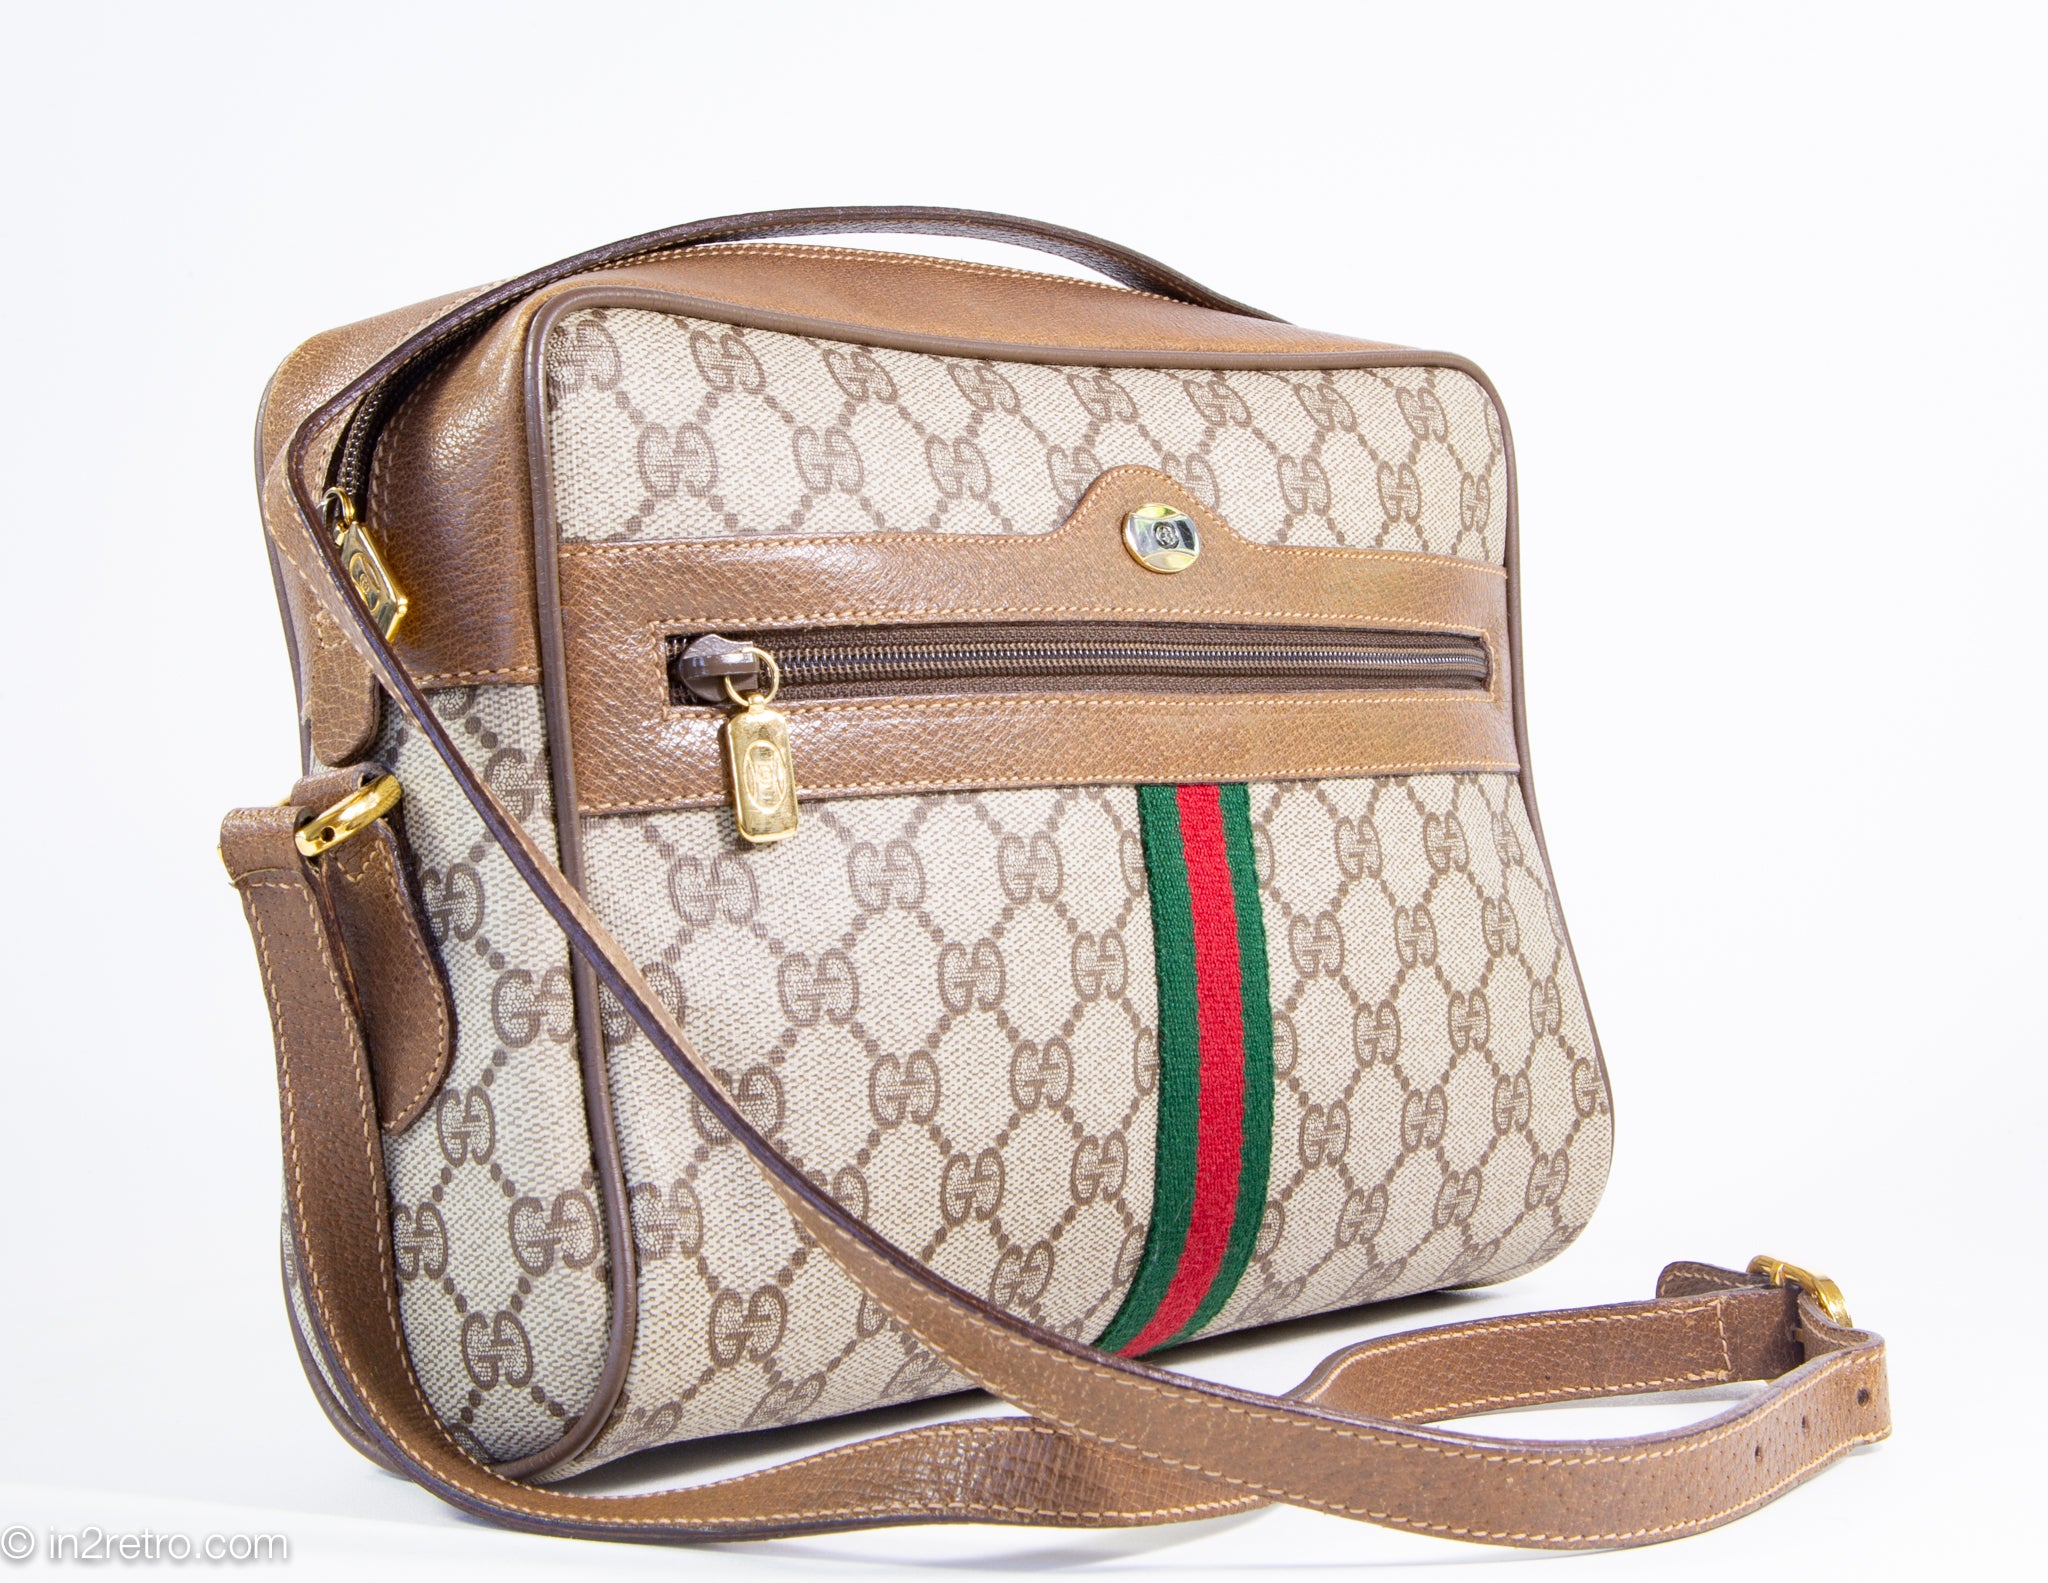 Authentic Gucci messenger crossbody bag